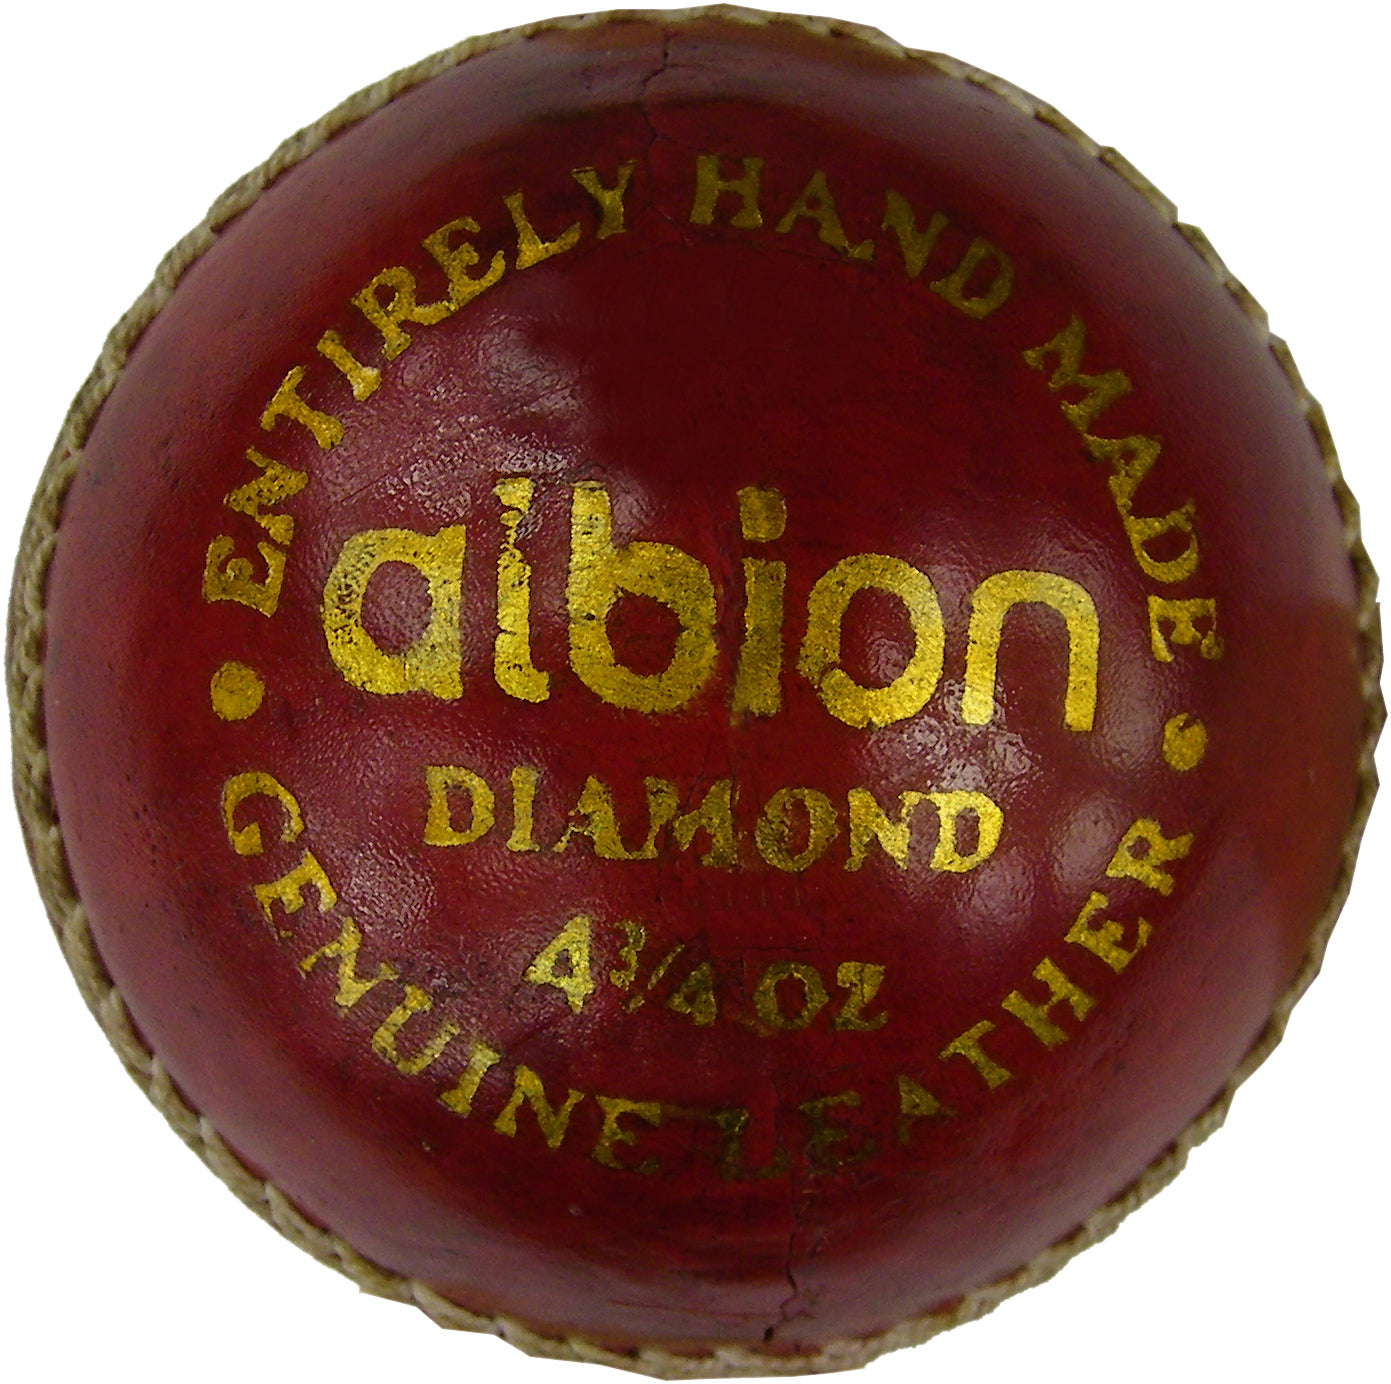 Albion Diamond Cricket Ball